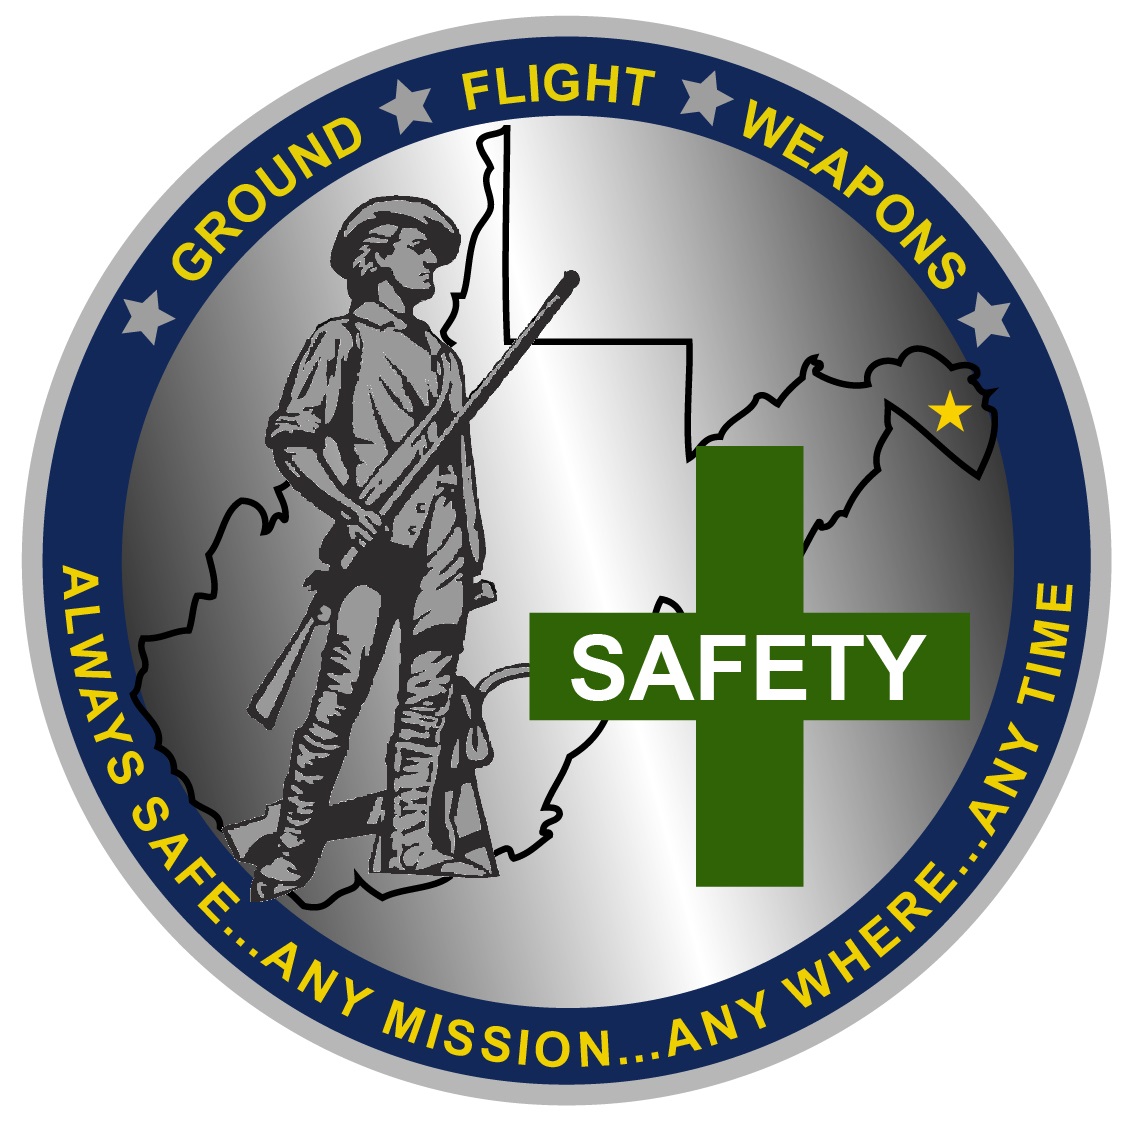 Aircraft Flight line – Ground Operations and Activities Checklist